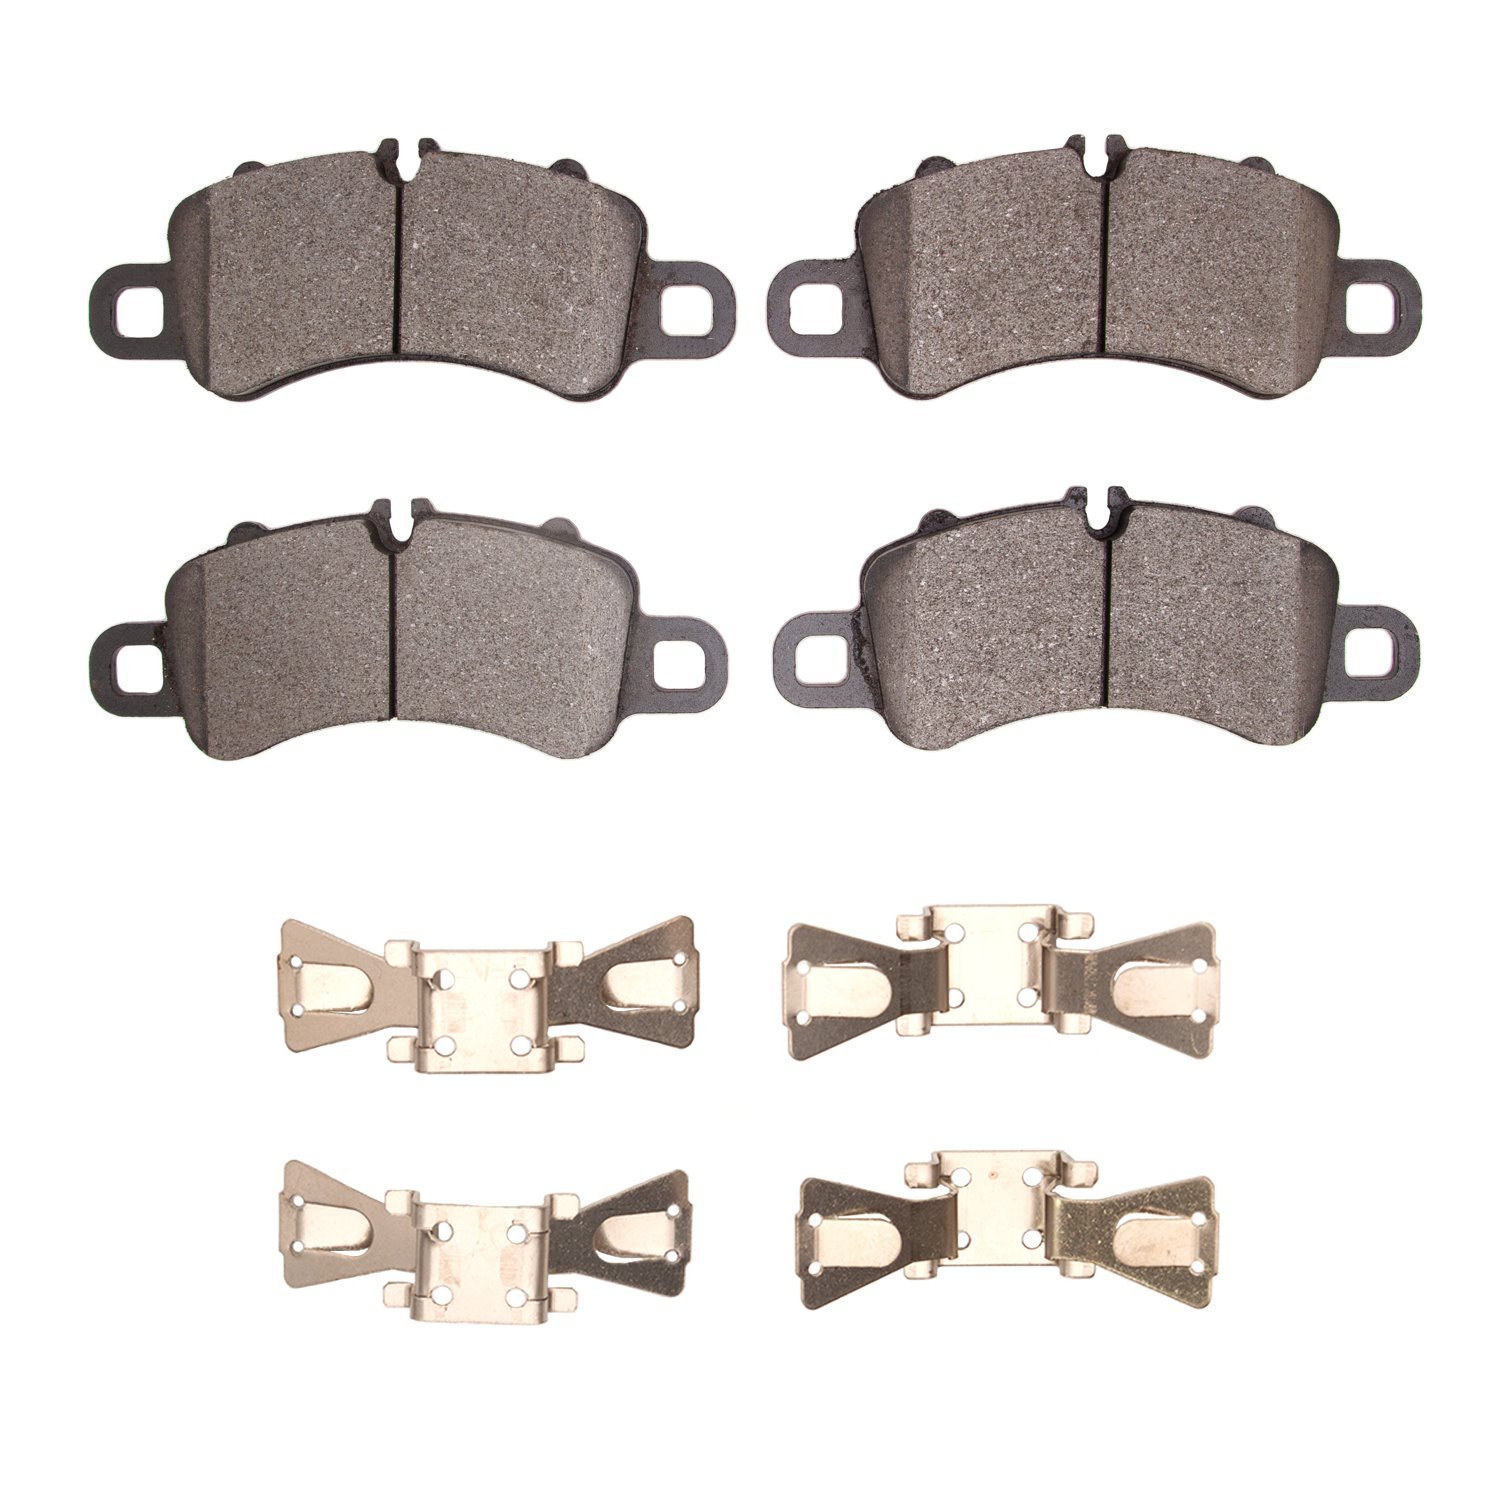 1310-1905-01 3000-Series Ceramic Brake Pads & Hardware Kit, Fits Select Porsche, Position: Front